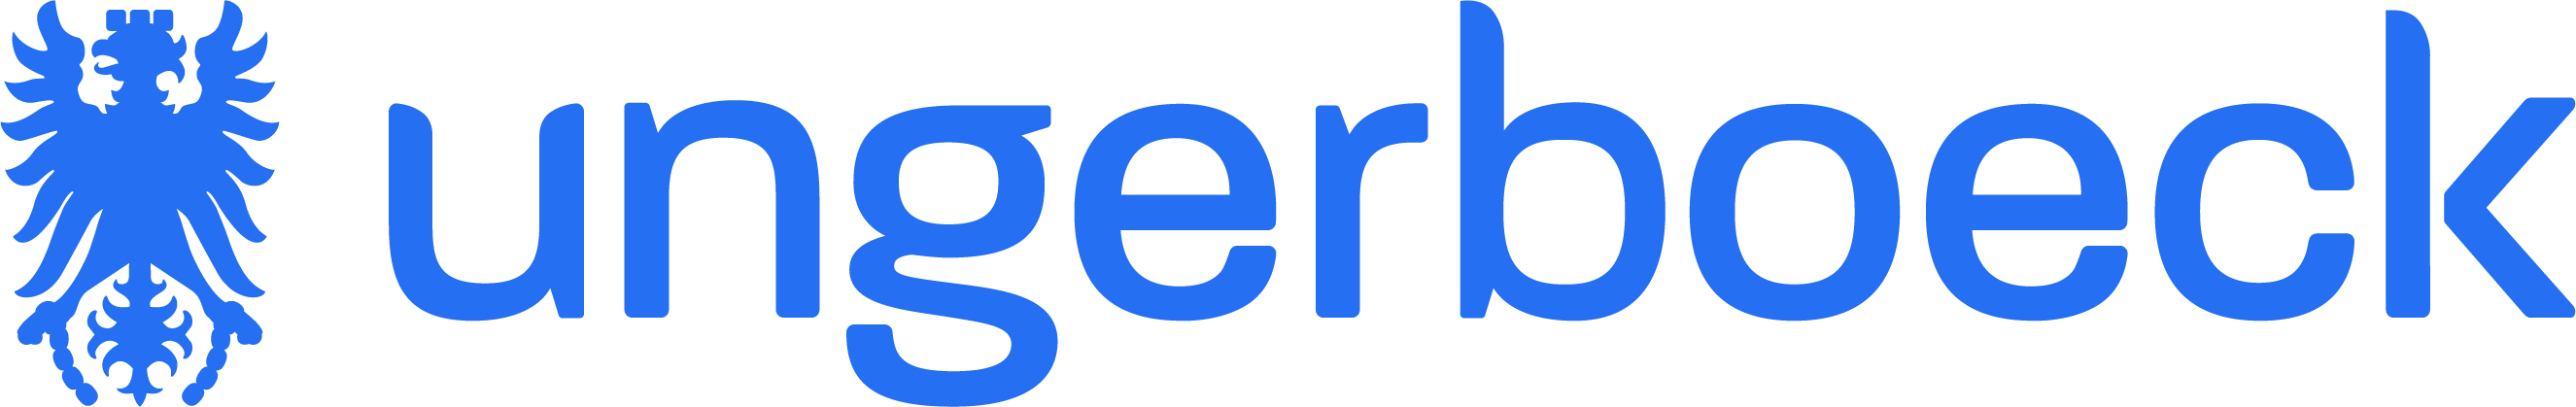 Ungerboeck Company Logo